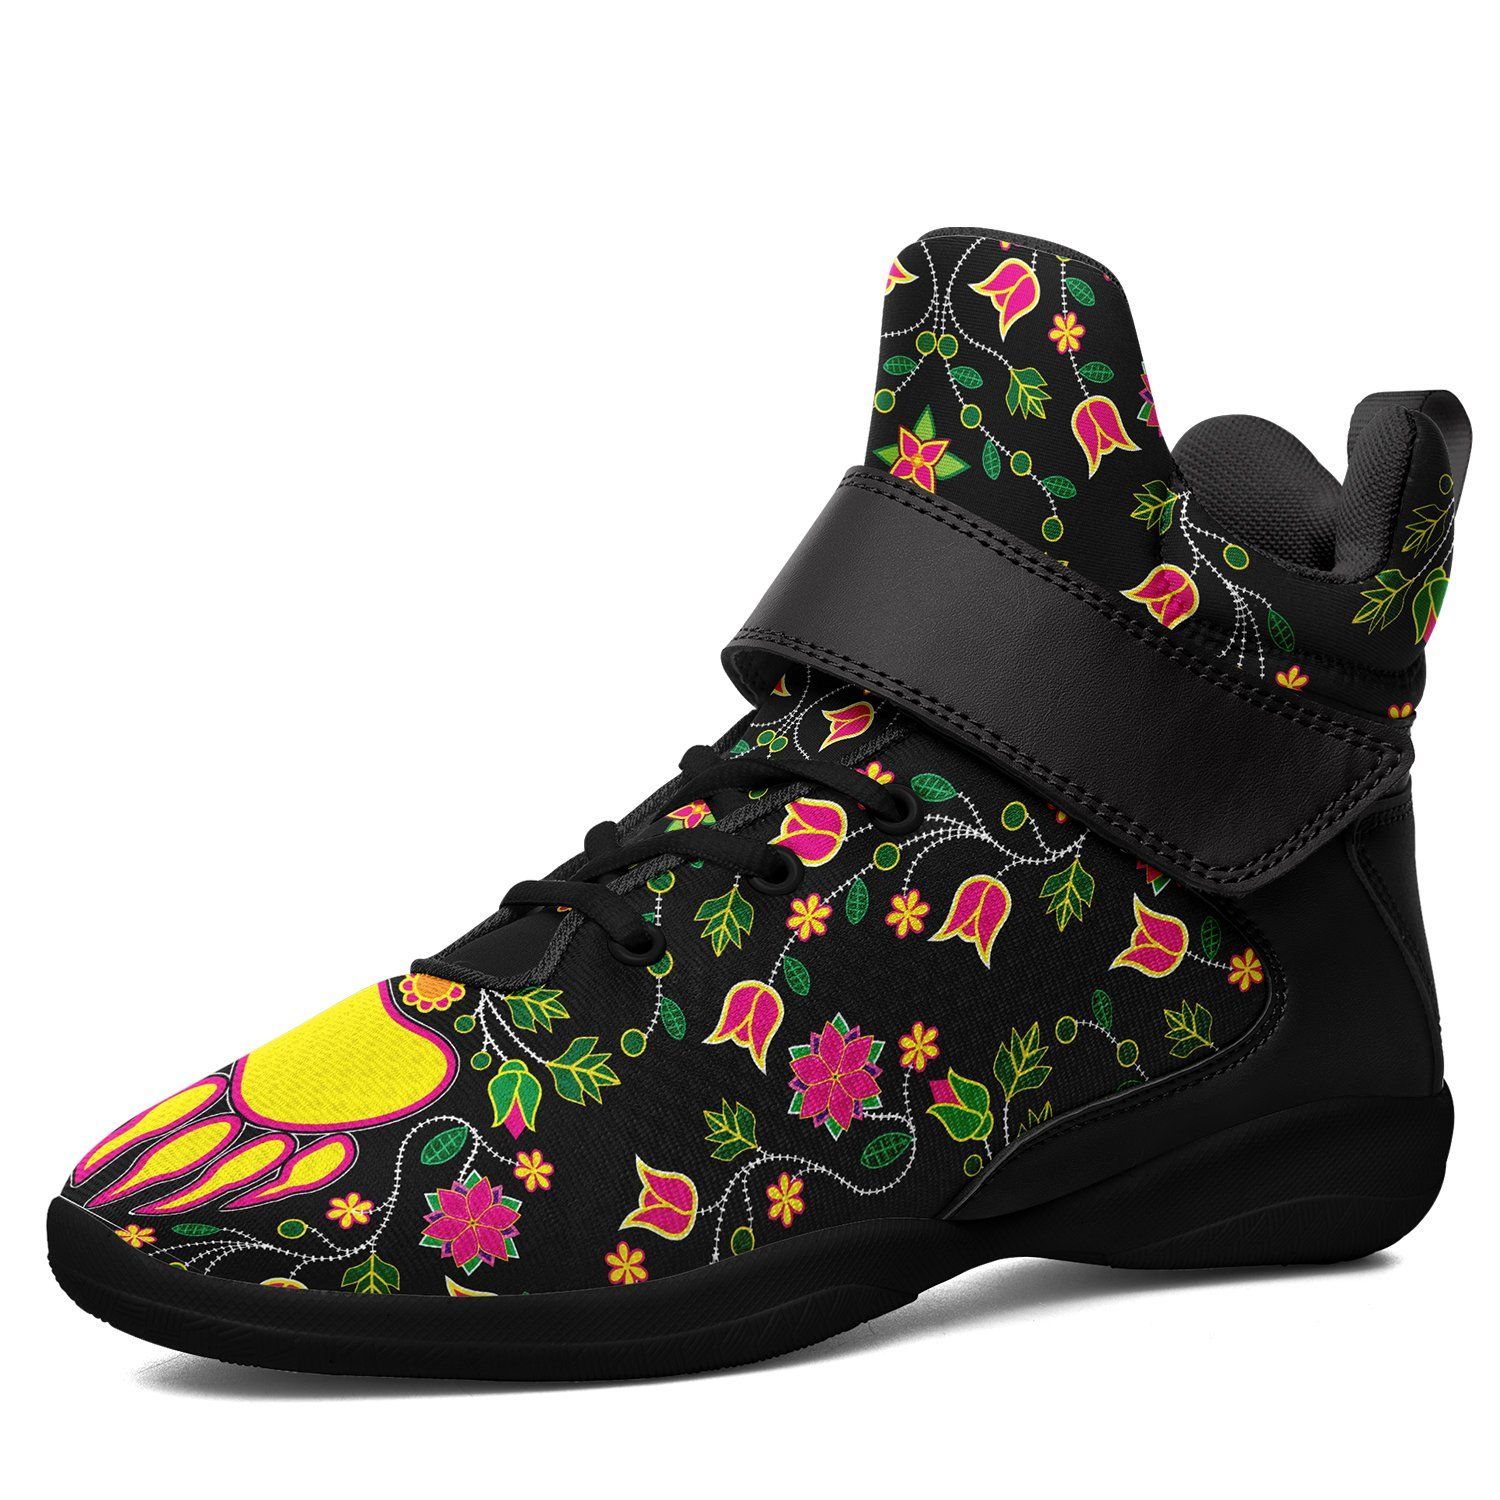 Floral Bearpaw Ipottaa Basketball / Sport High Top Shoes - Black Sole 49 Dzine US Women 8.5 / US Men 7 / EUR 40 Black Sole with Black Strap 